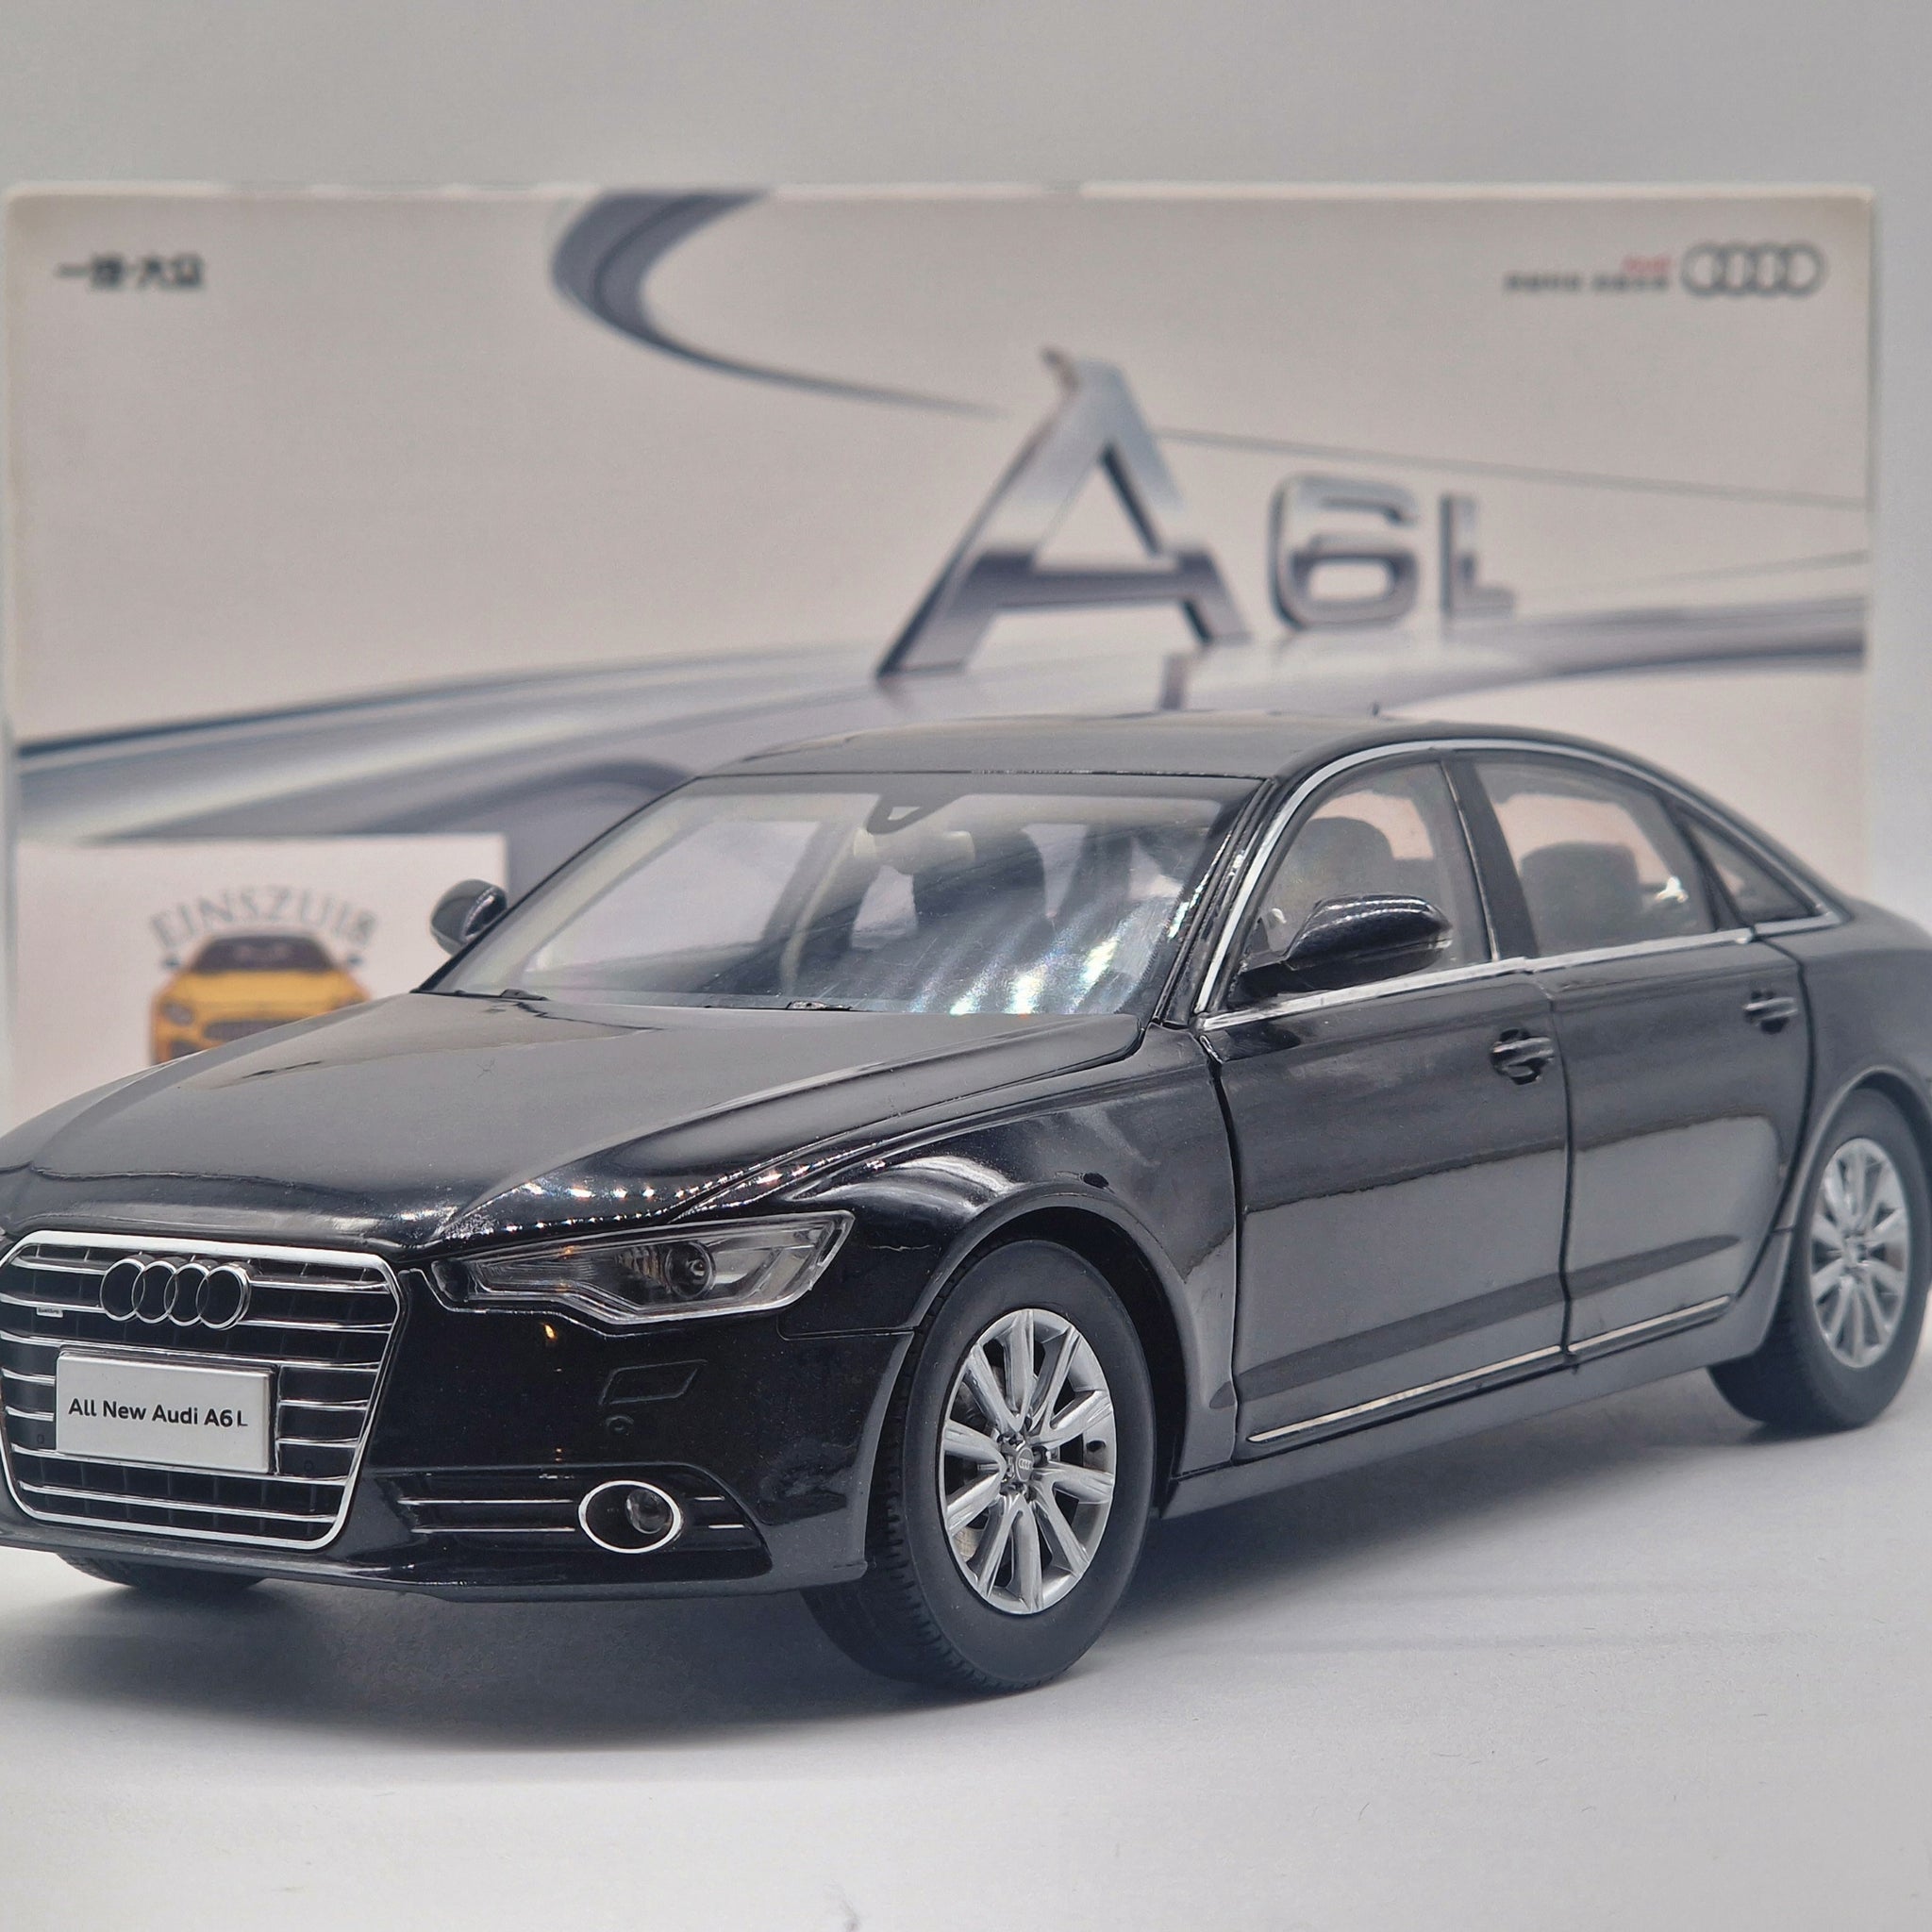 Audi A6L TFSI 2012 Black (Asia Exclusive)